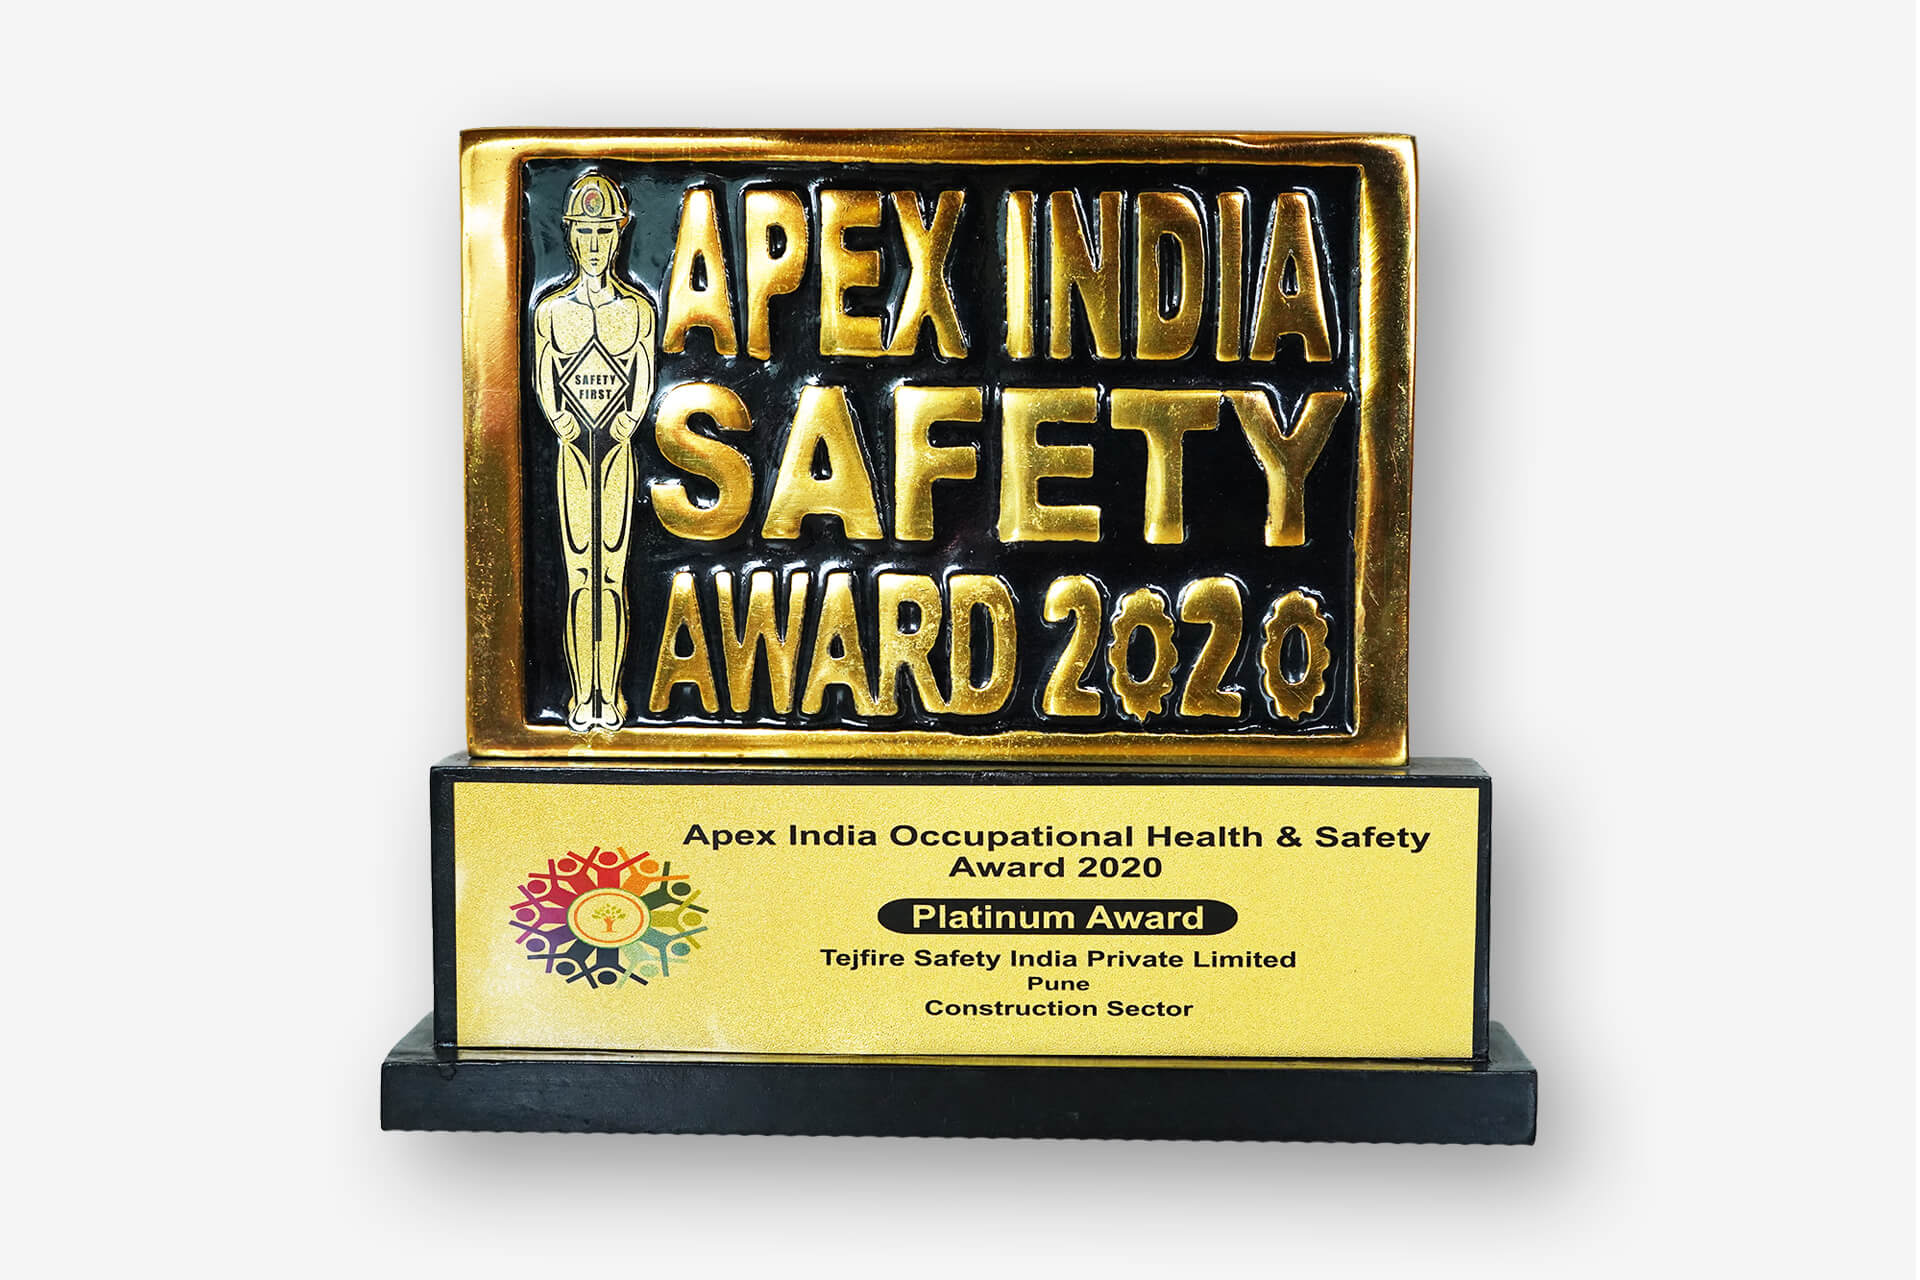 Apex India Award 2020